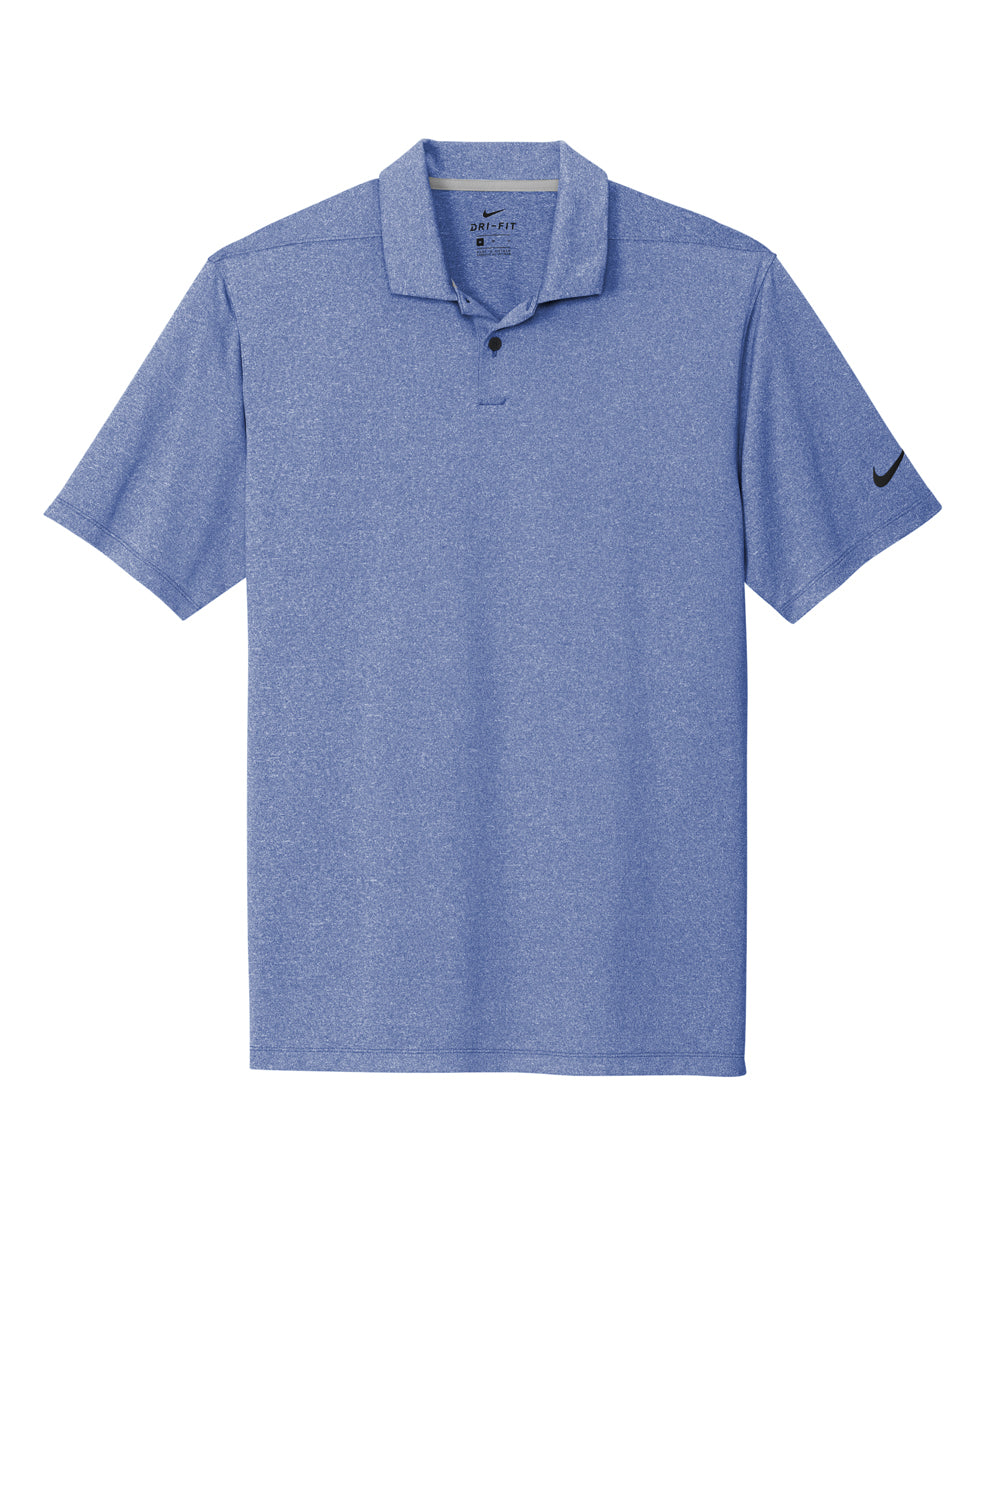 Nike NKDC2108 Mens Vapor Dri-Fit Moisture Wicking Short Sleeve Polo Shirt Heather Game Royal Blue Flat Front